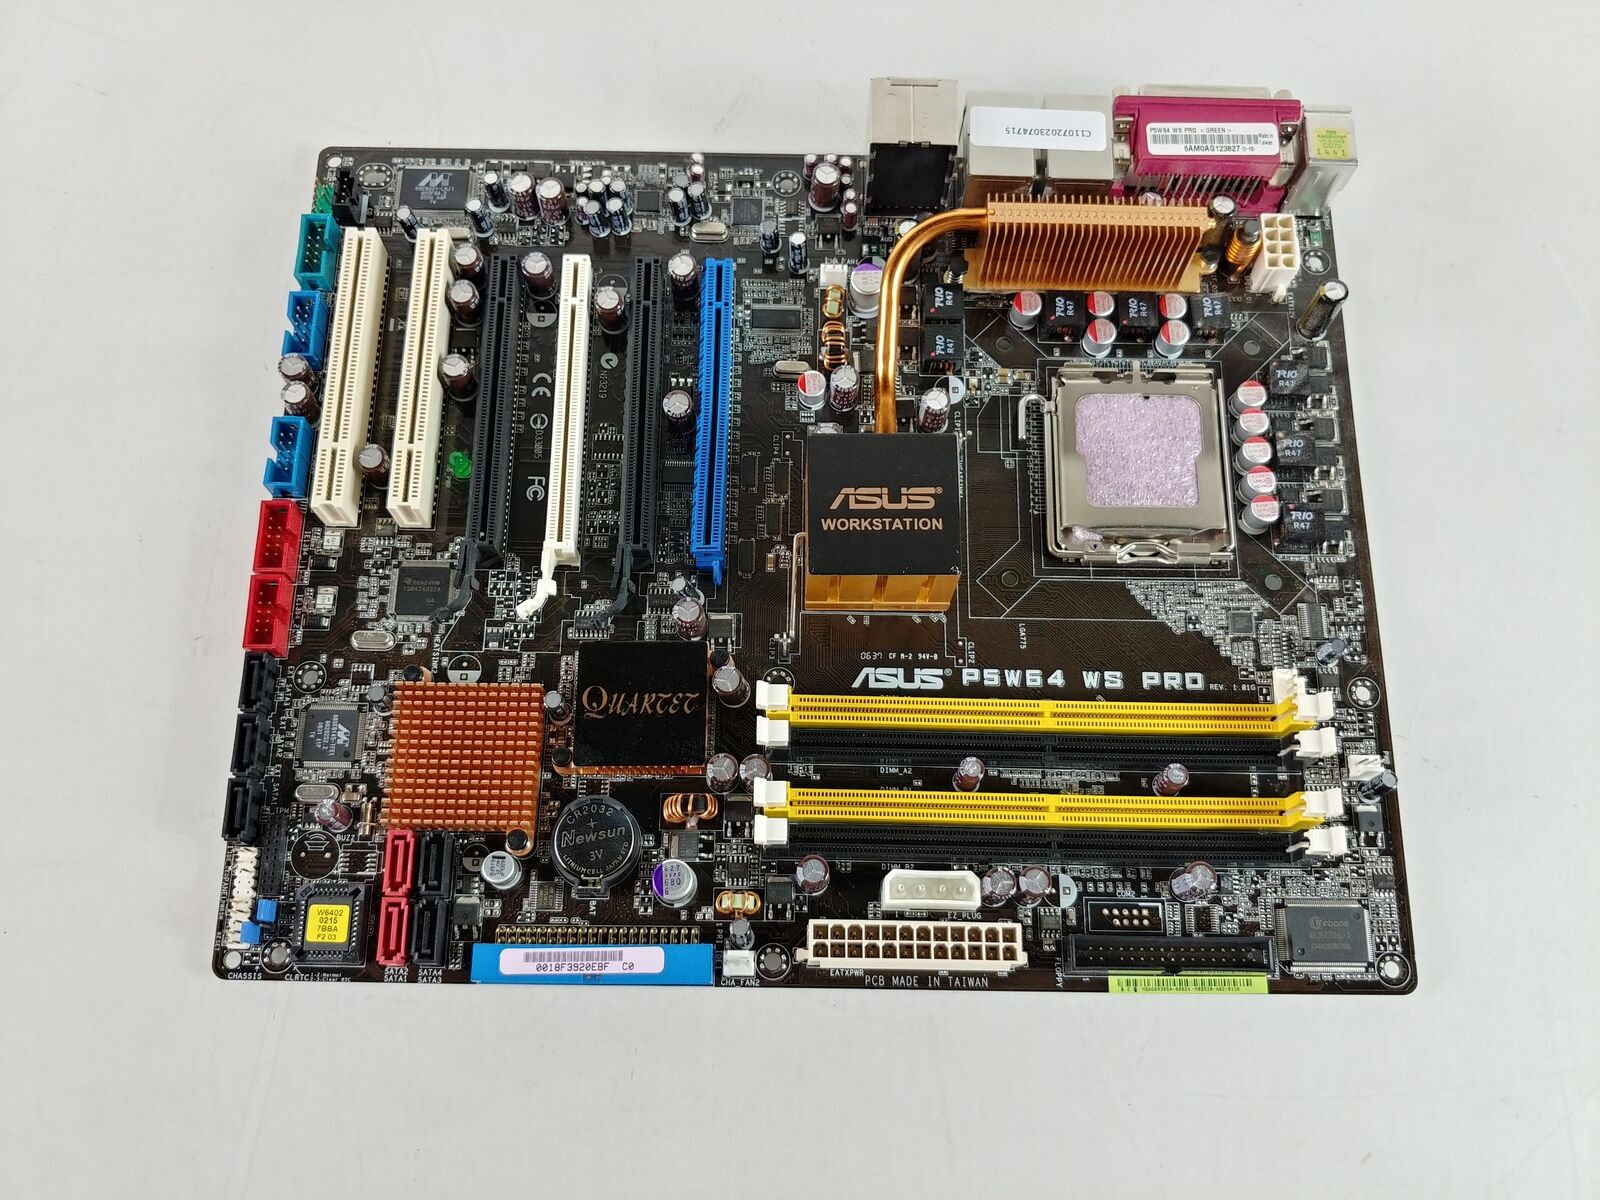 Asus P5W64 WS PRO Intel LGA 775 DDR2 SDRAM Desktop Motherboard